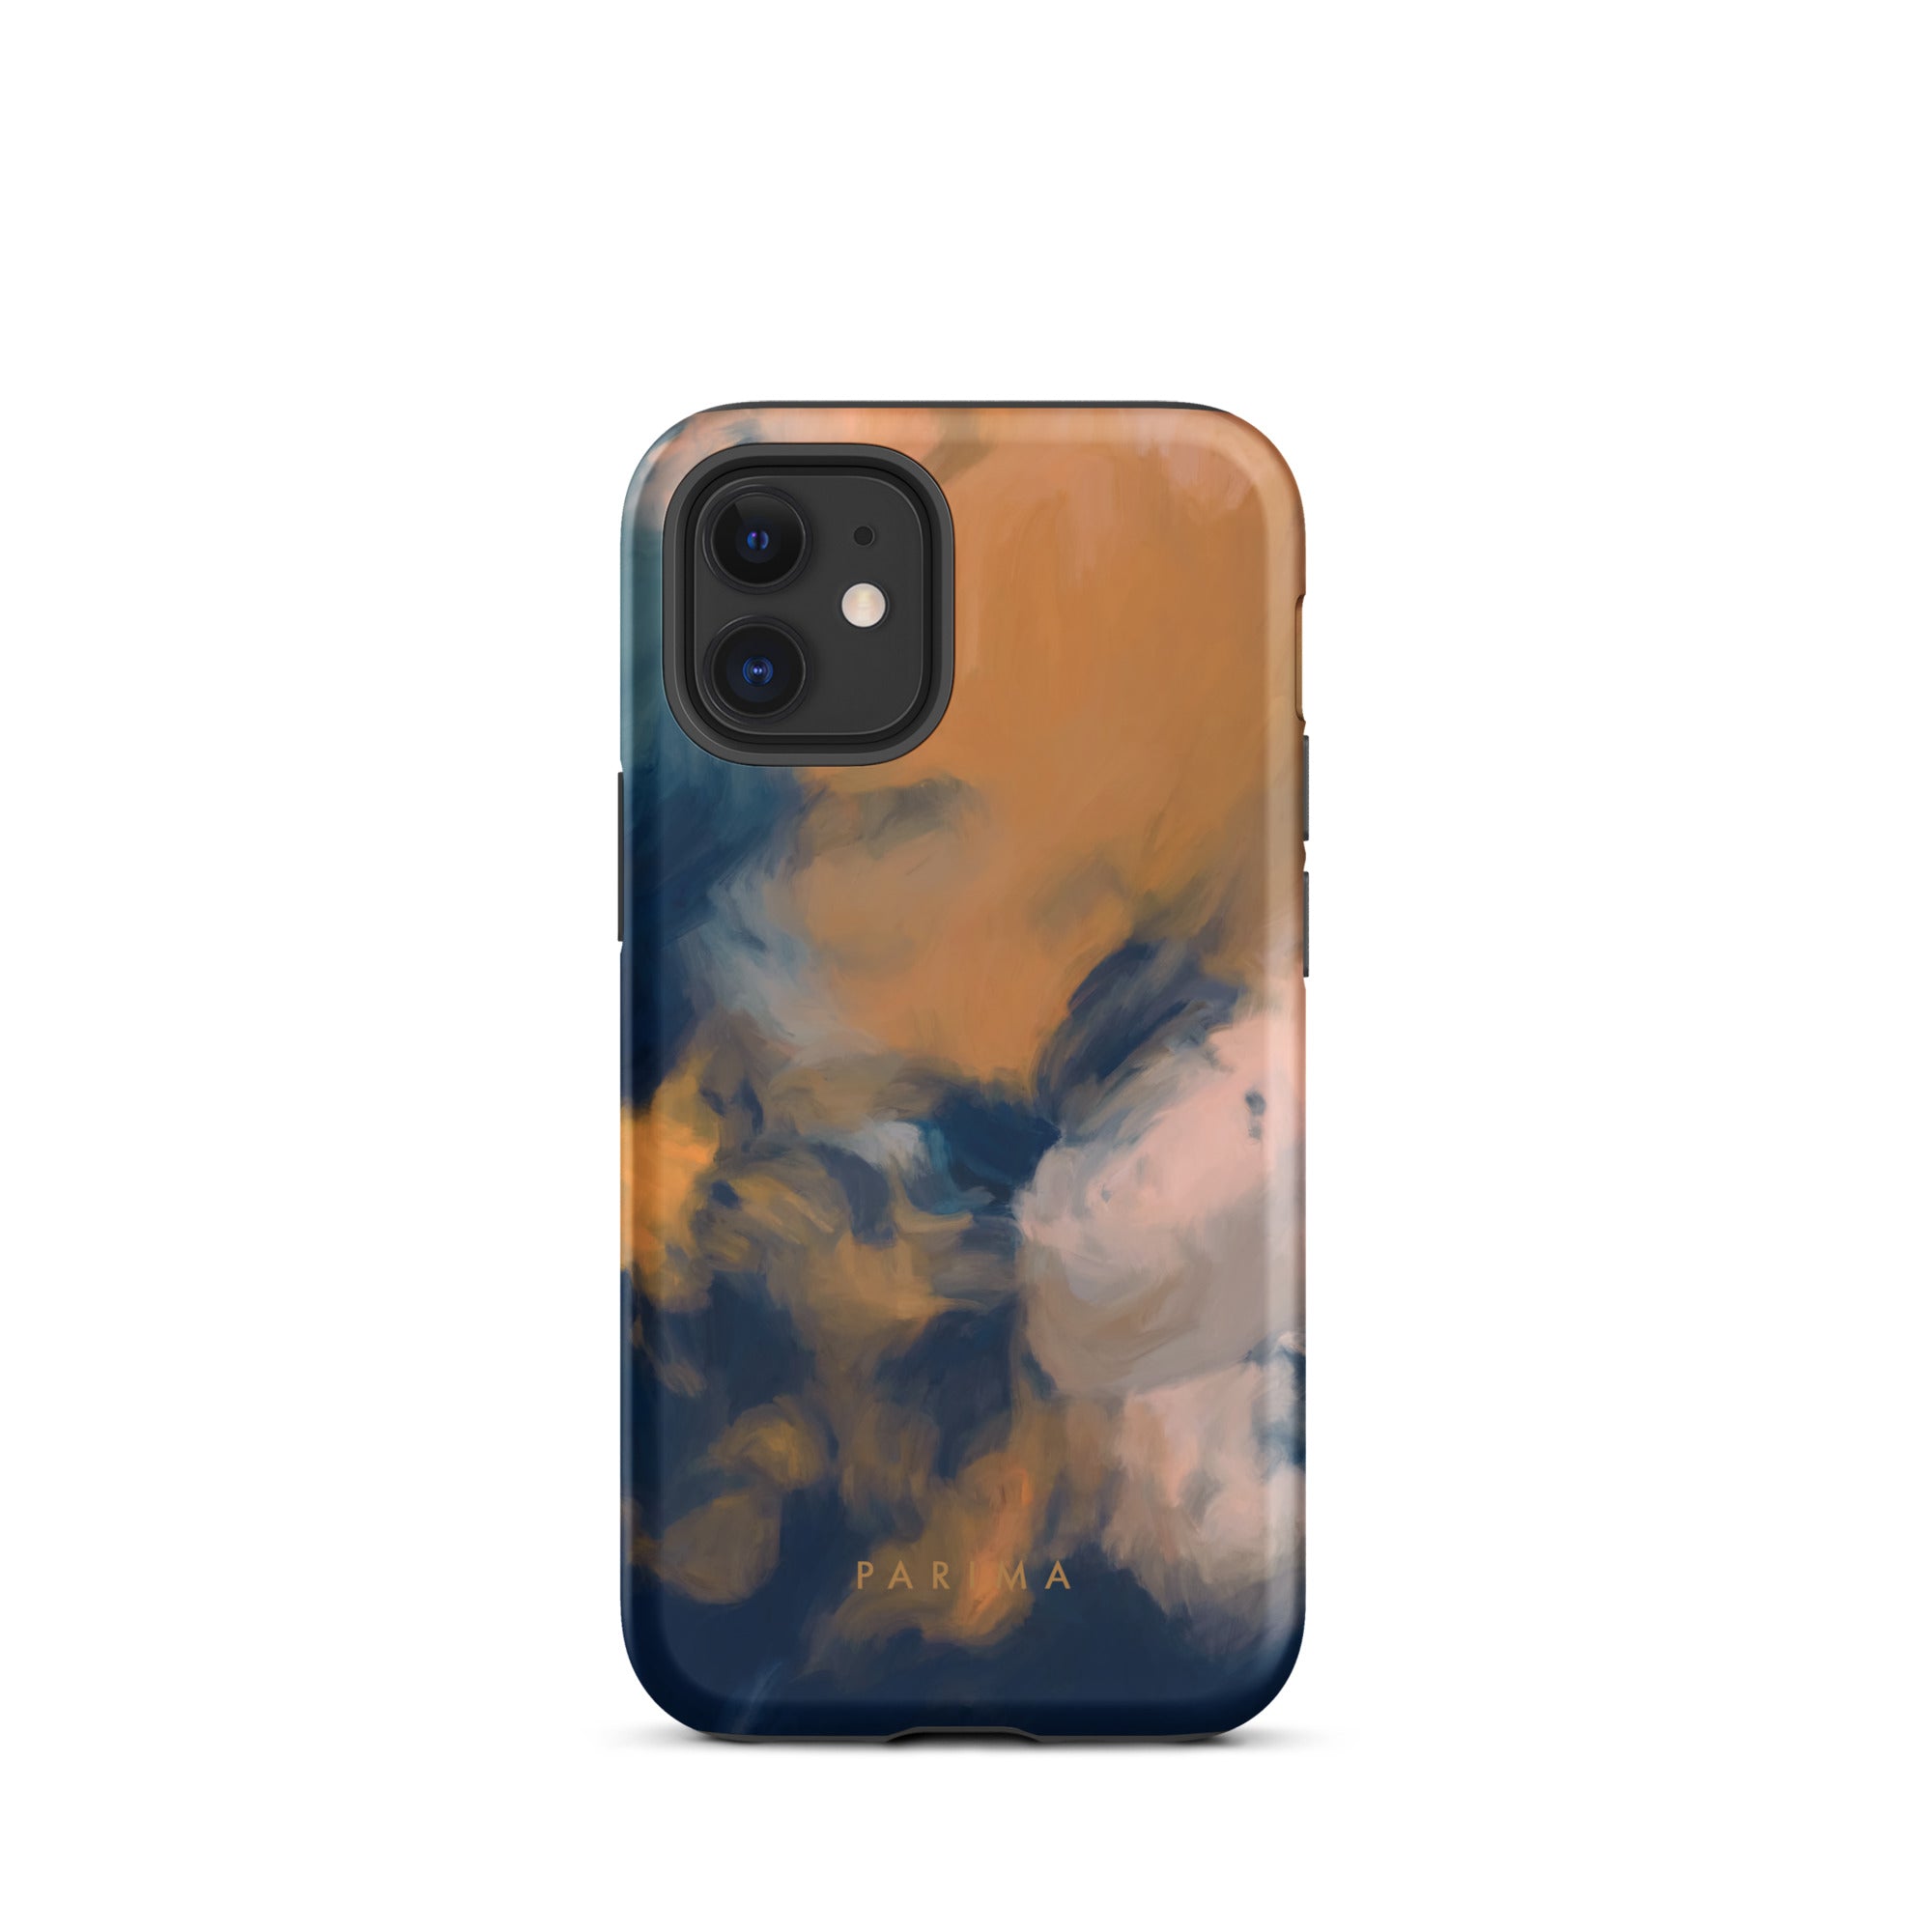 Mia Luna, blue and orange abstract art - iPhone 12 mini tough case by Parima Studio